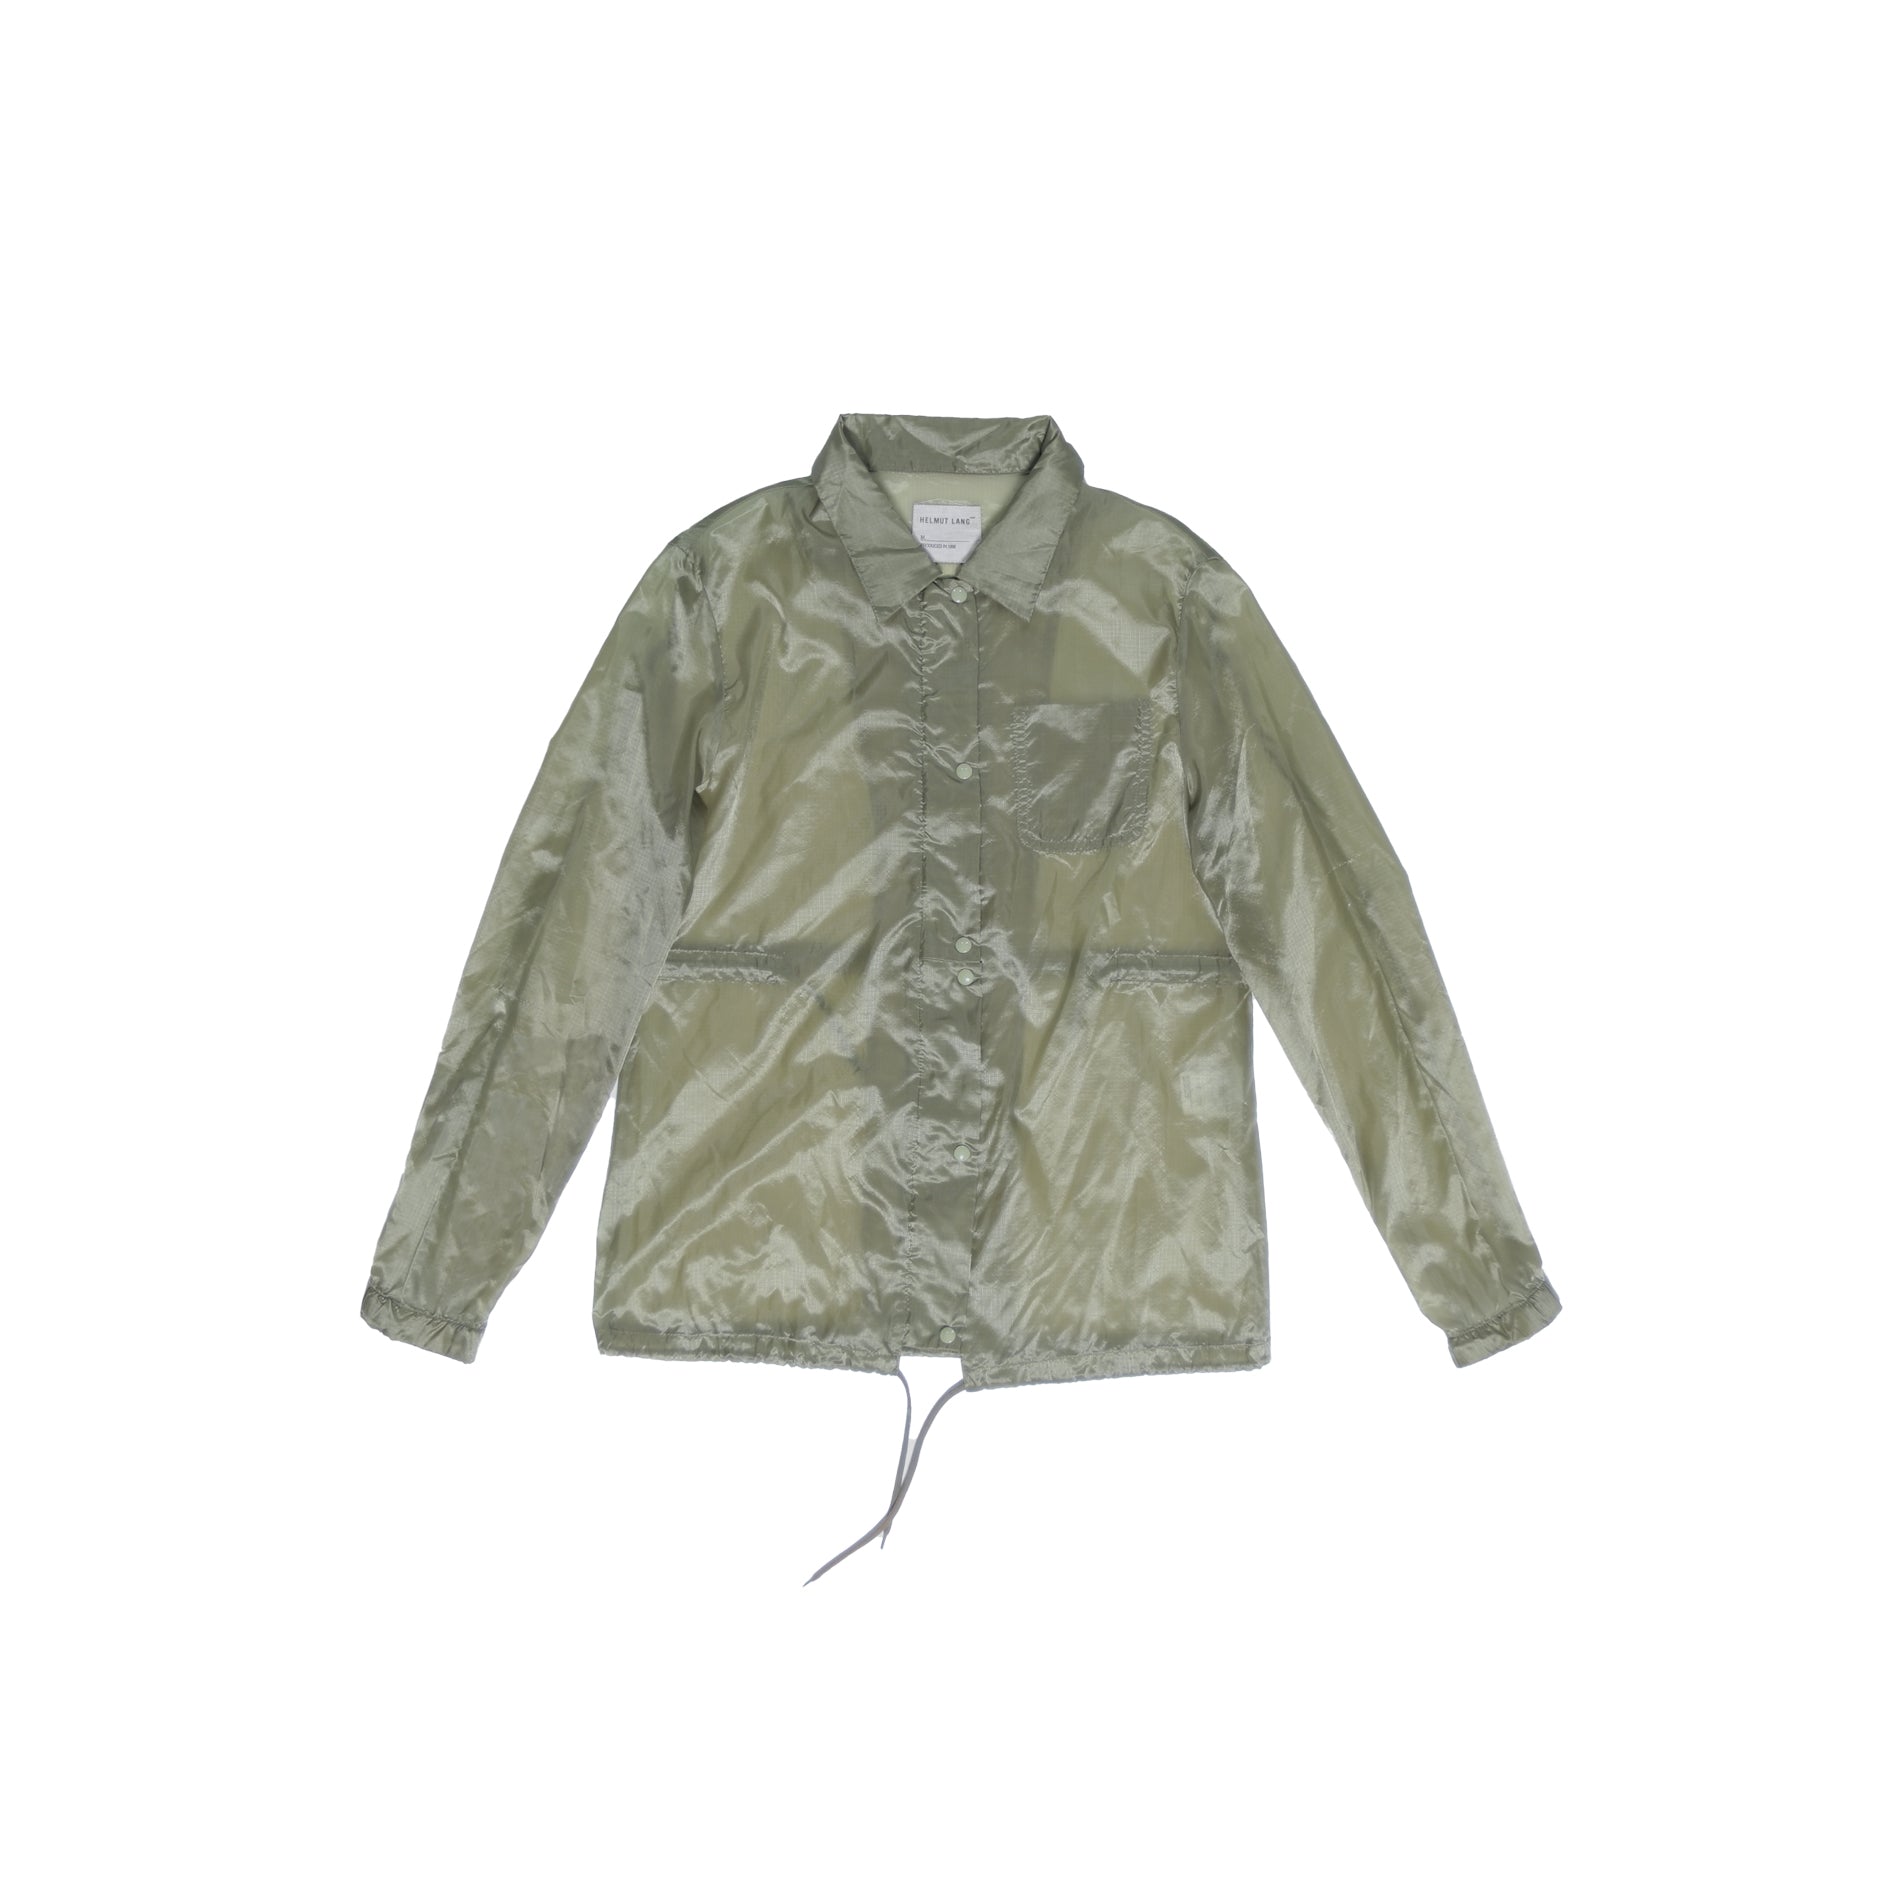 Helmut Lang SS98 Translucent Ripstop Jacket